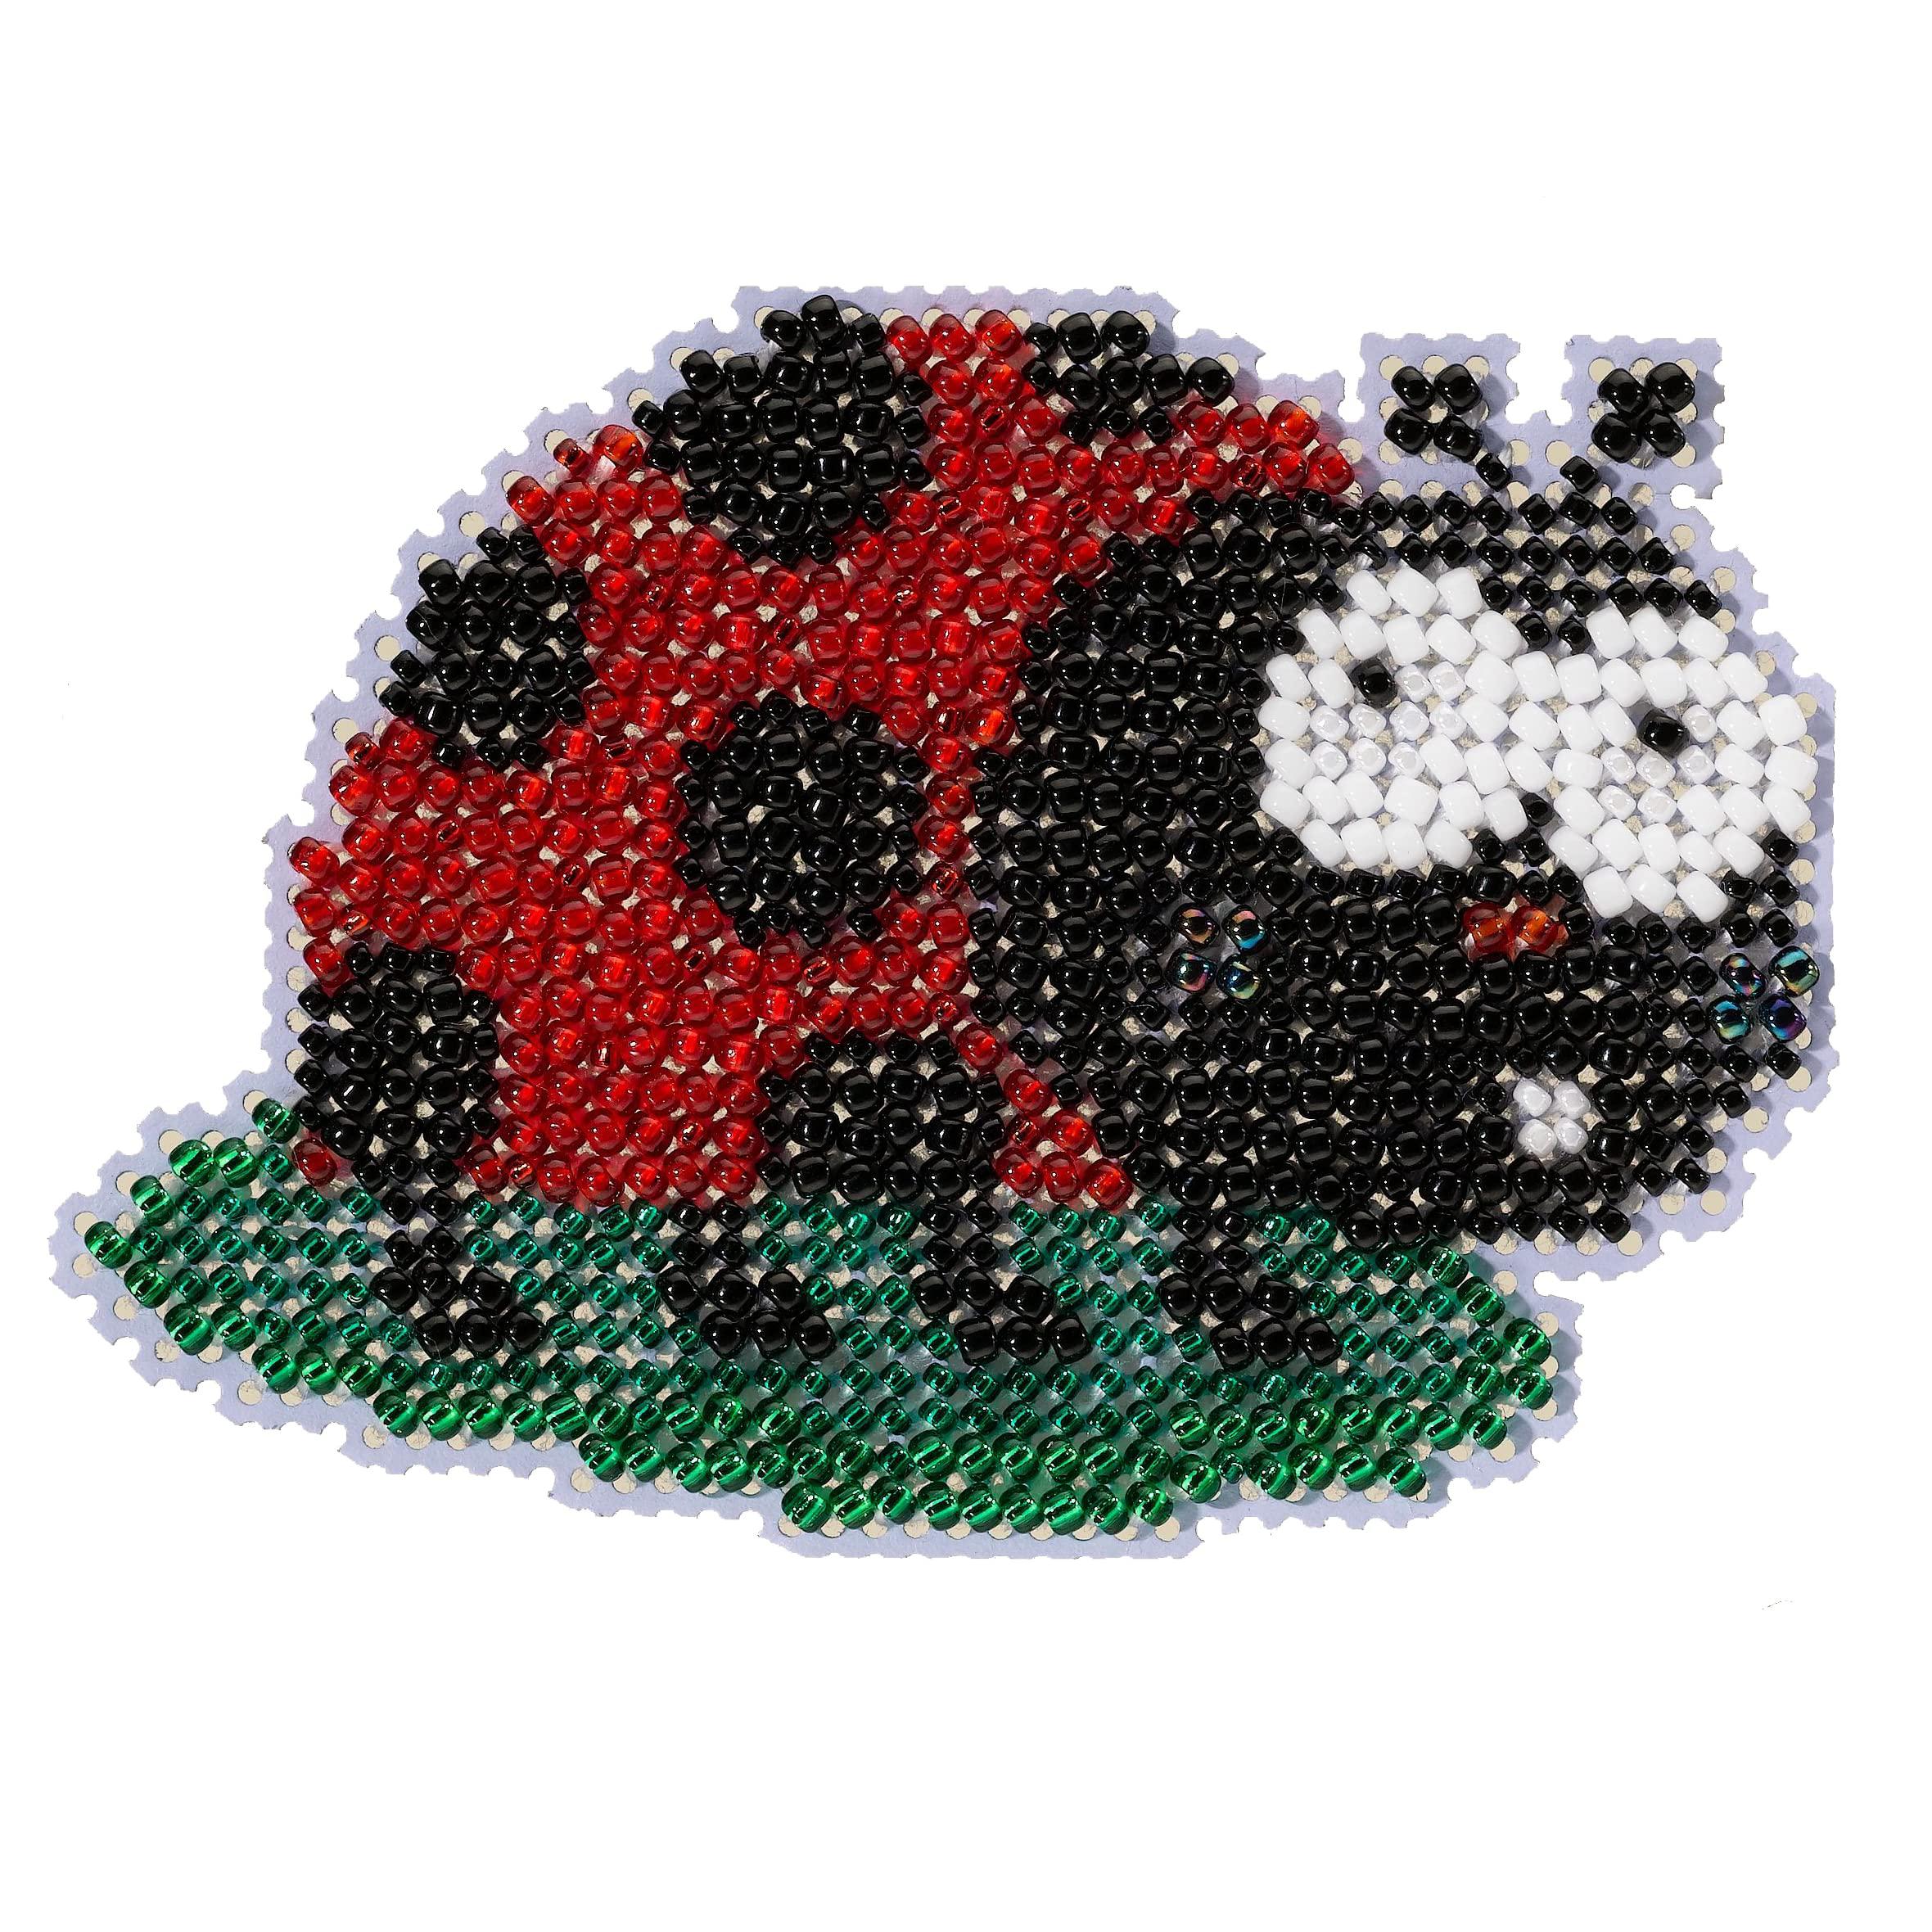 Mill Hill ladybug counted cross stitch ornament kit mill hill 2022